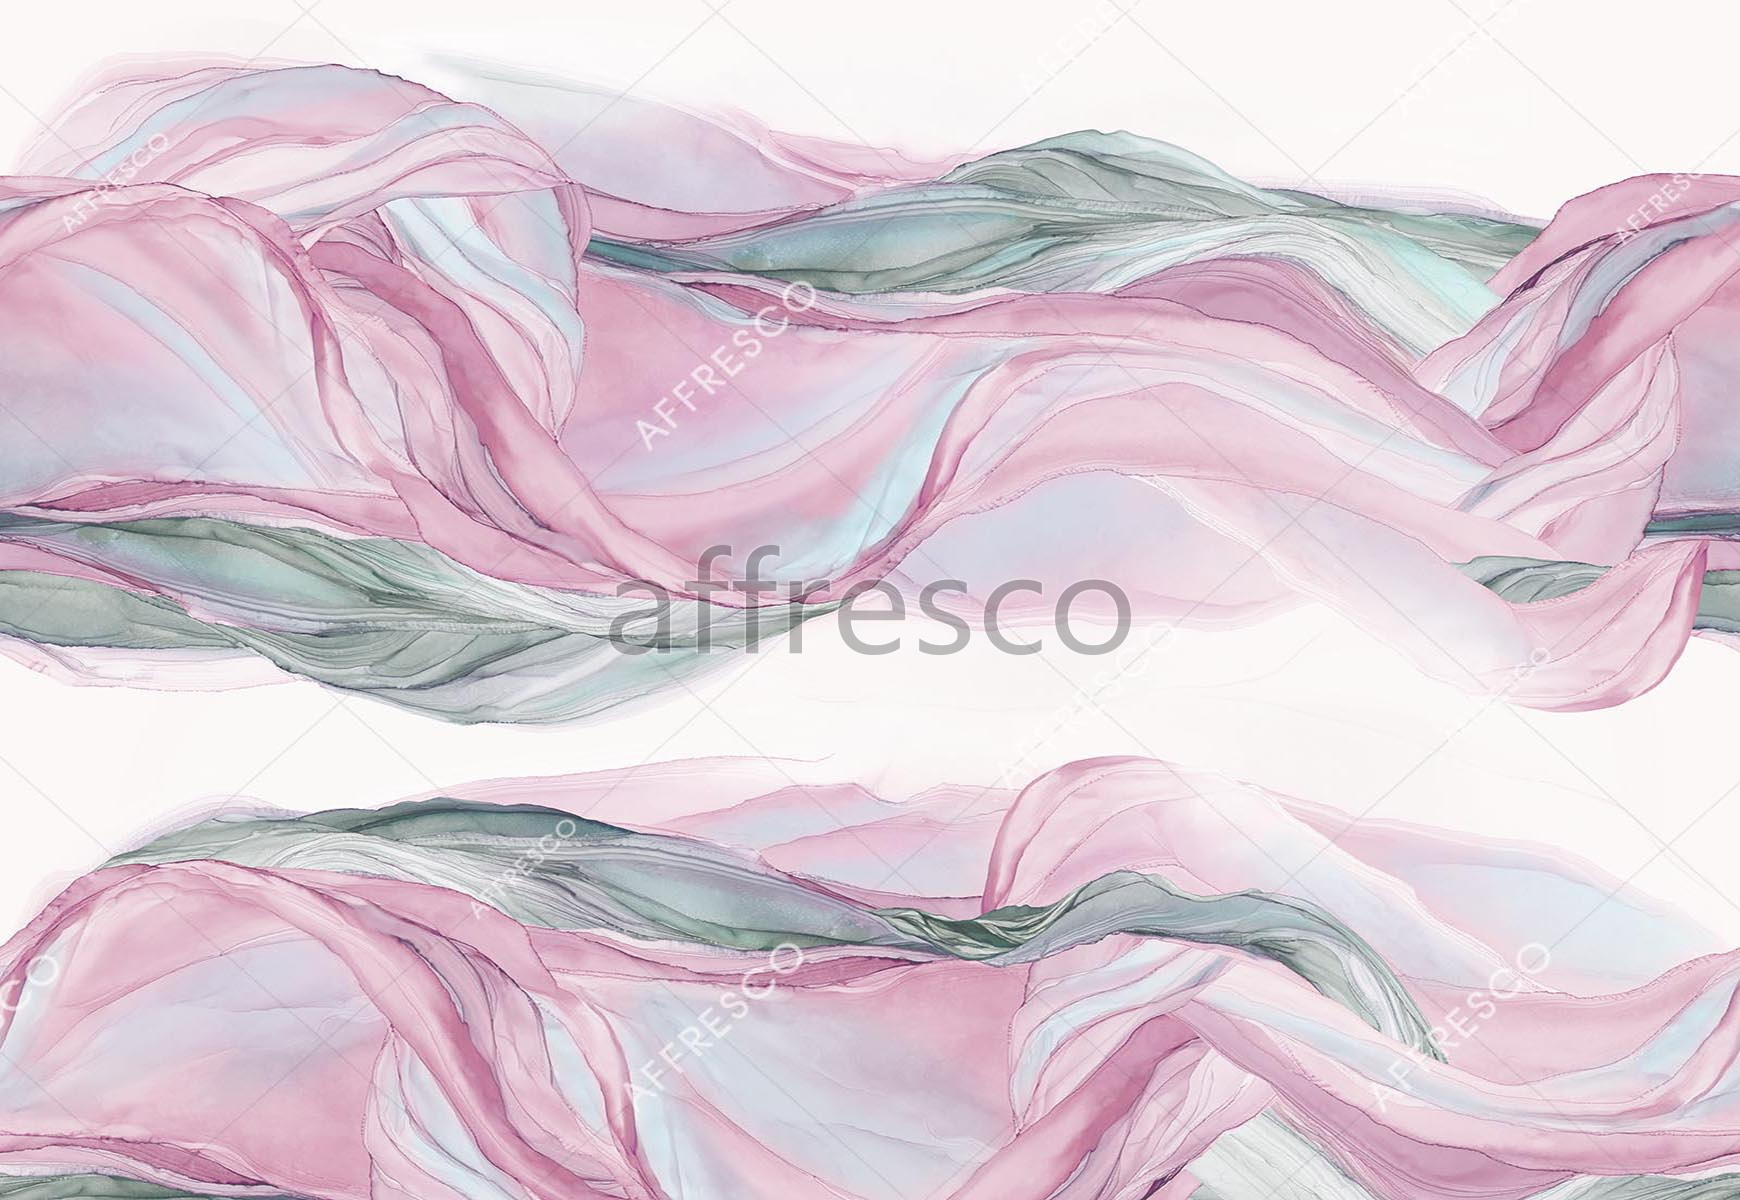 ID139077 | Fluid | Pink dreams | Affresco Factory